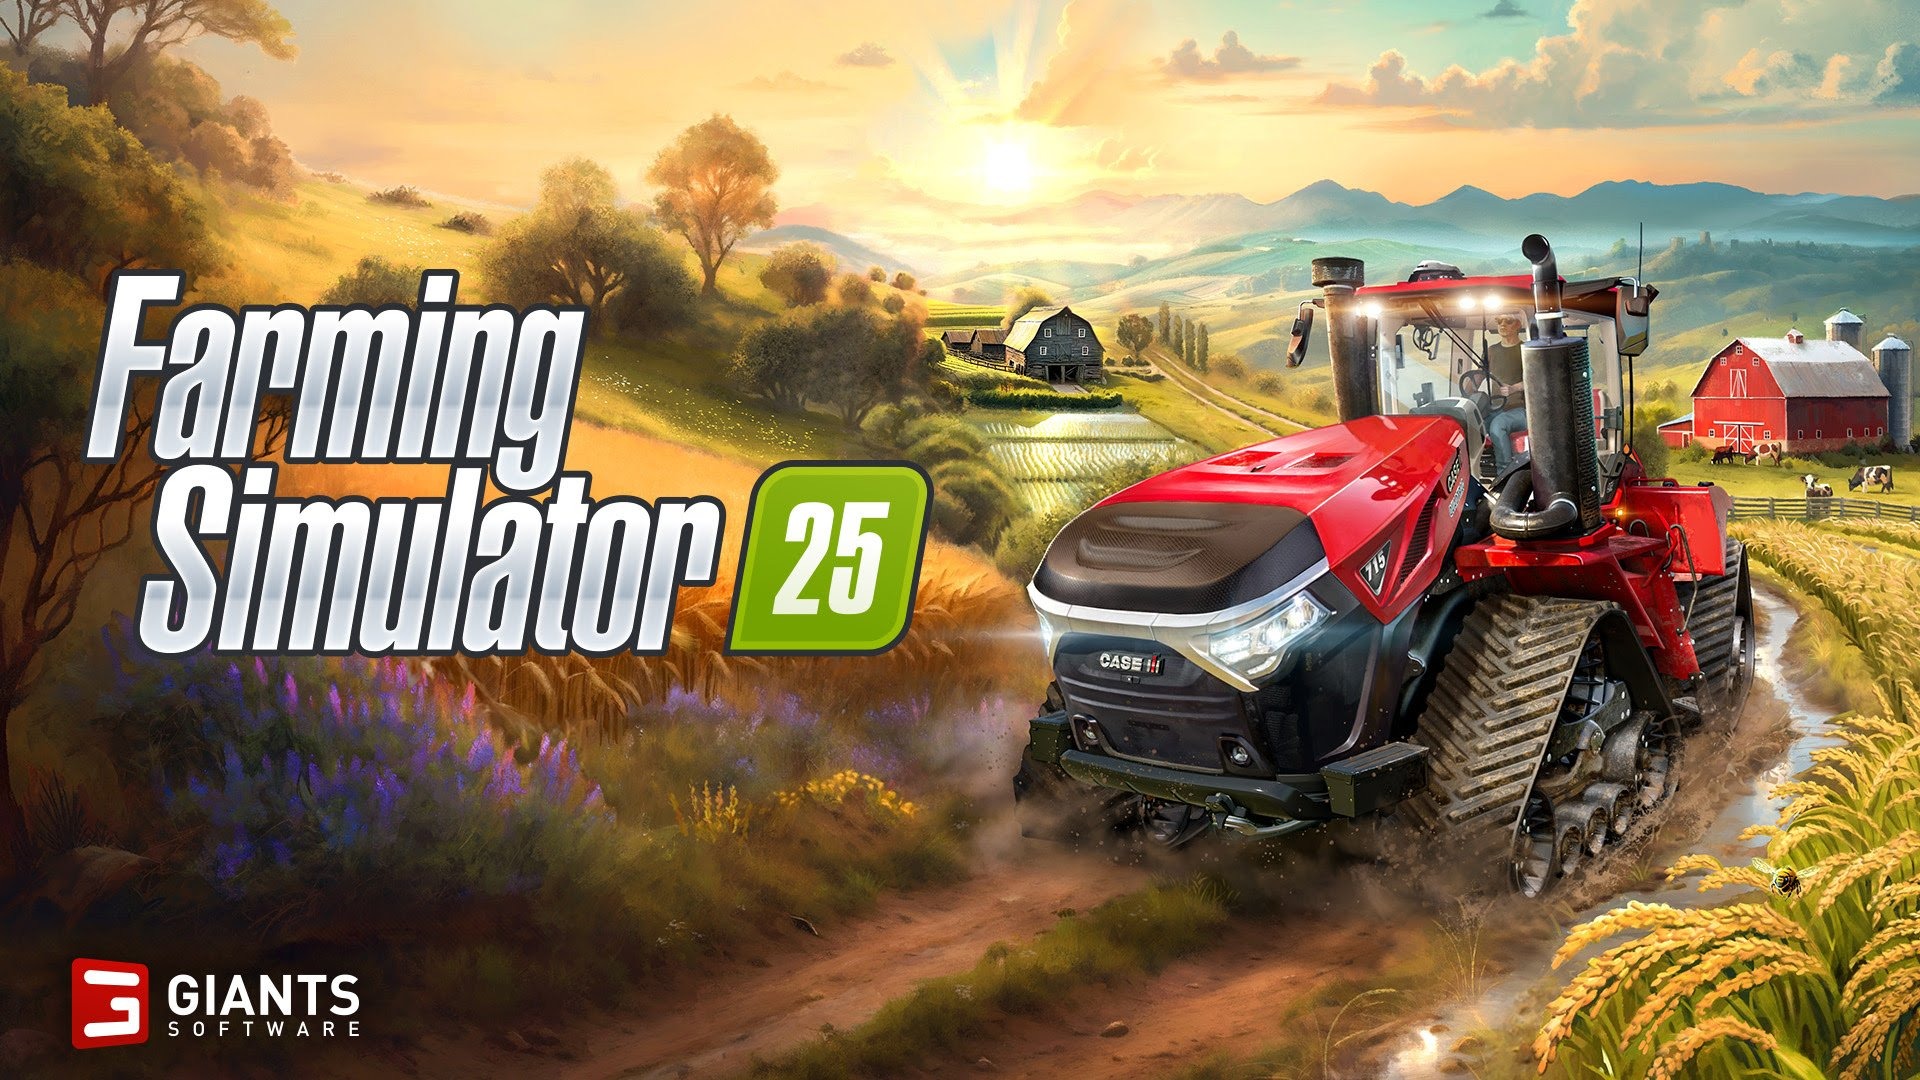 Farming Simulator 25 Announced: Preliminary Orders Opened